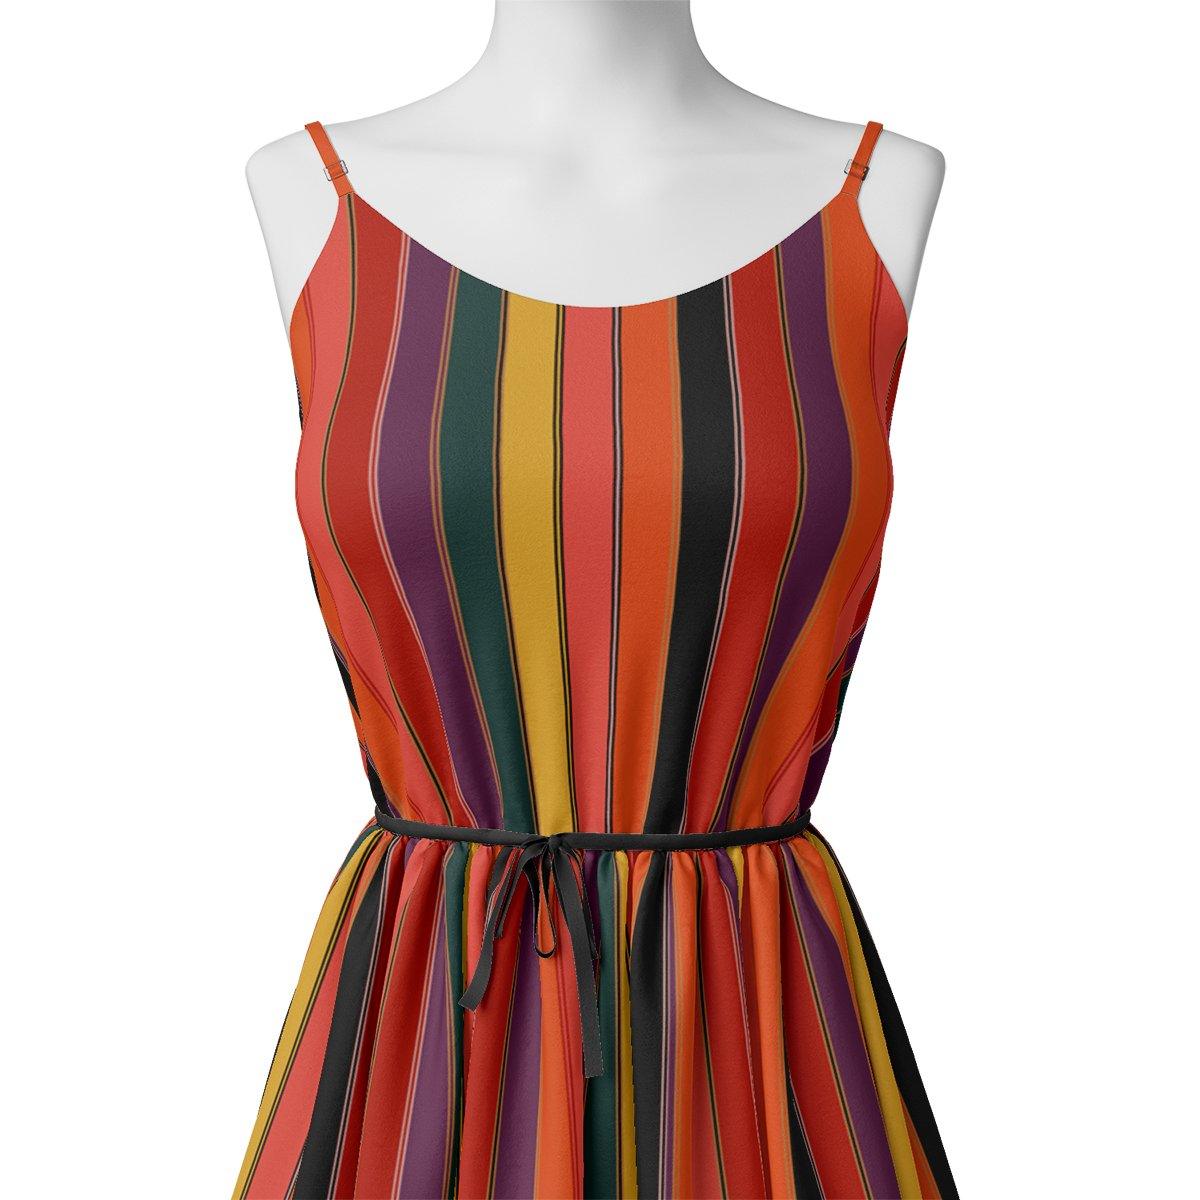 Tiny Serpentine Stripes Pattern Digital Printed Fabric - Tusser Silk - FAB VOGUE Studio®